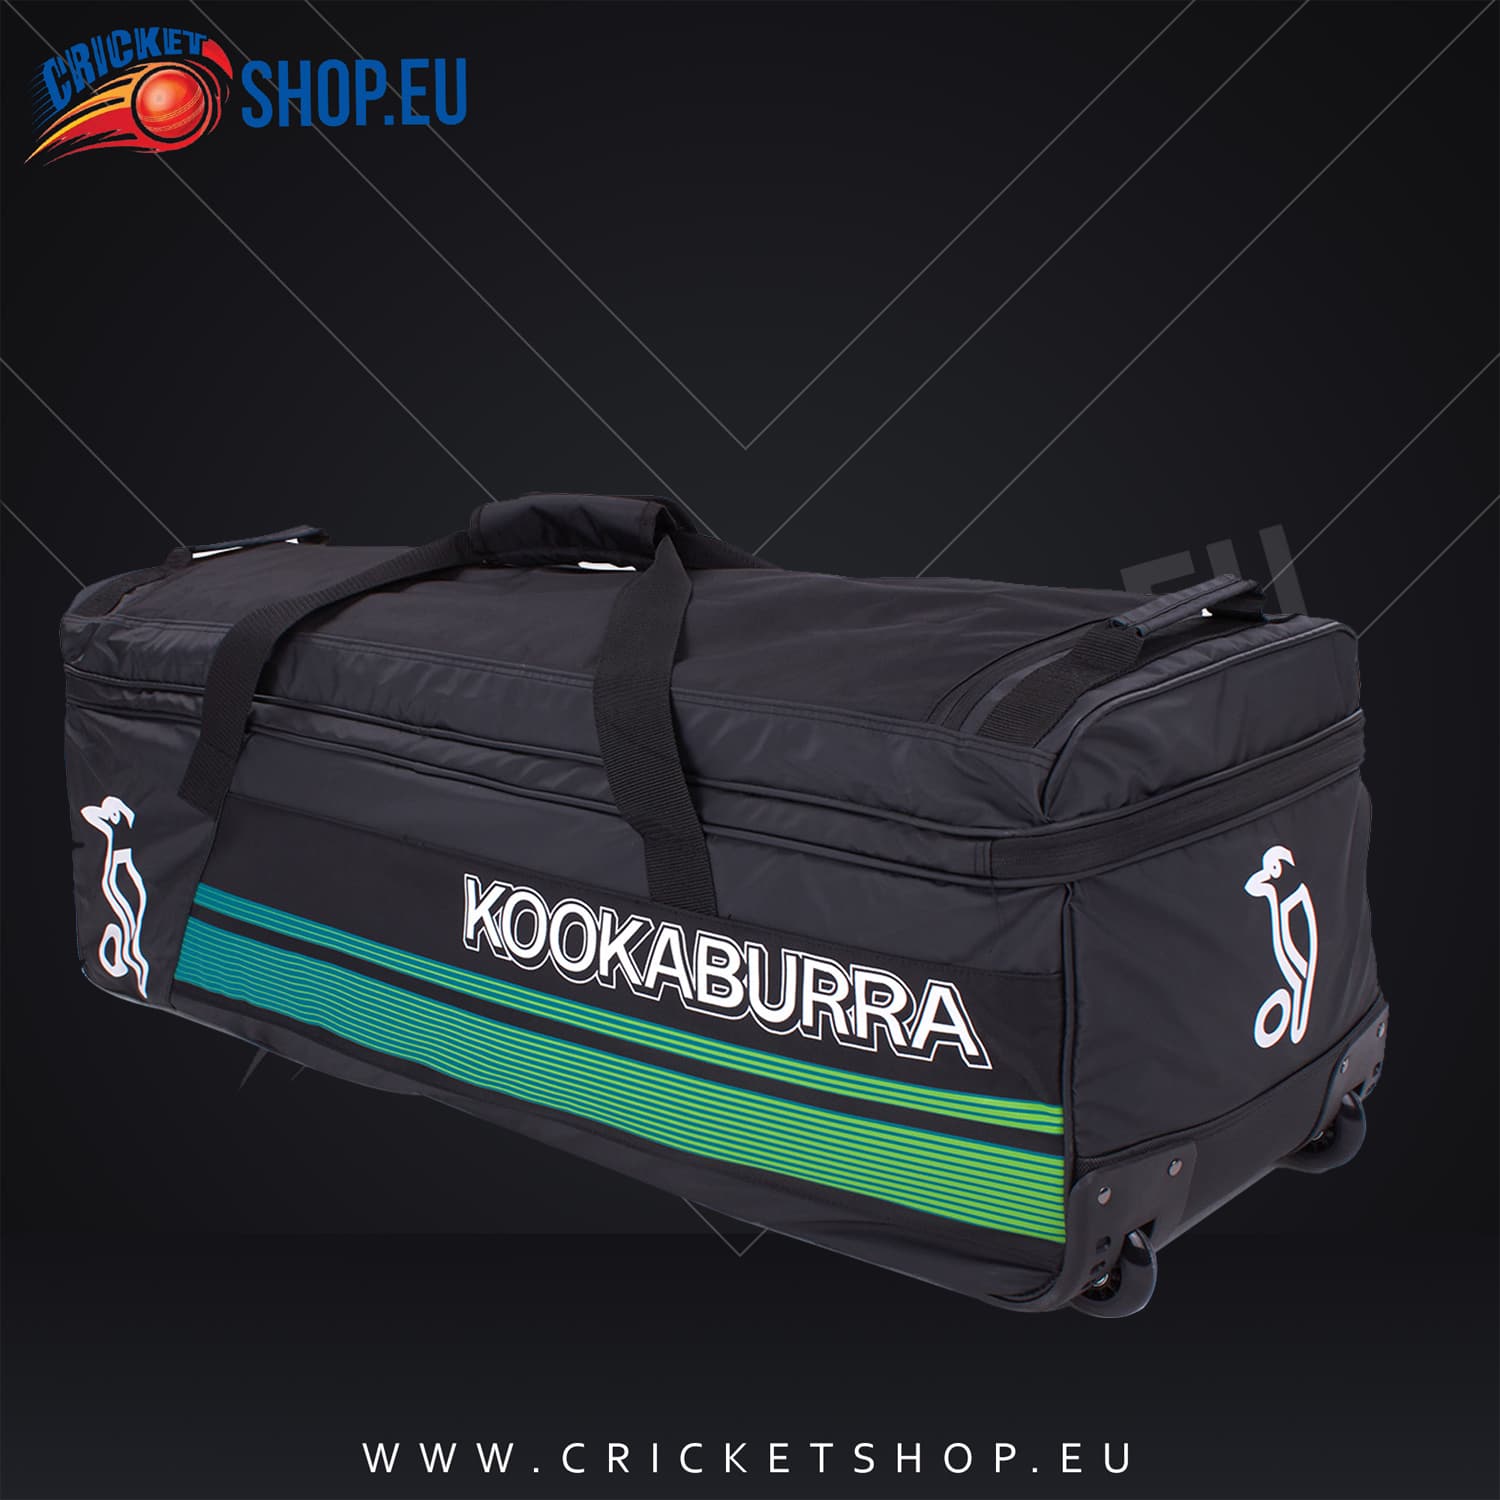 Kookaburra Pro Players Wheelie Cricket Bag